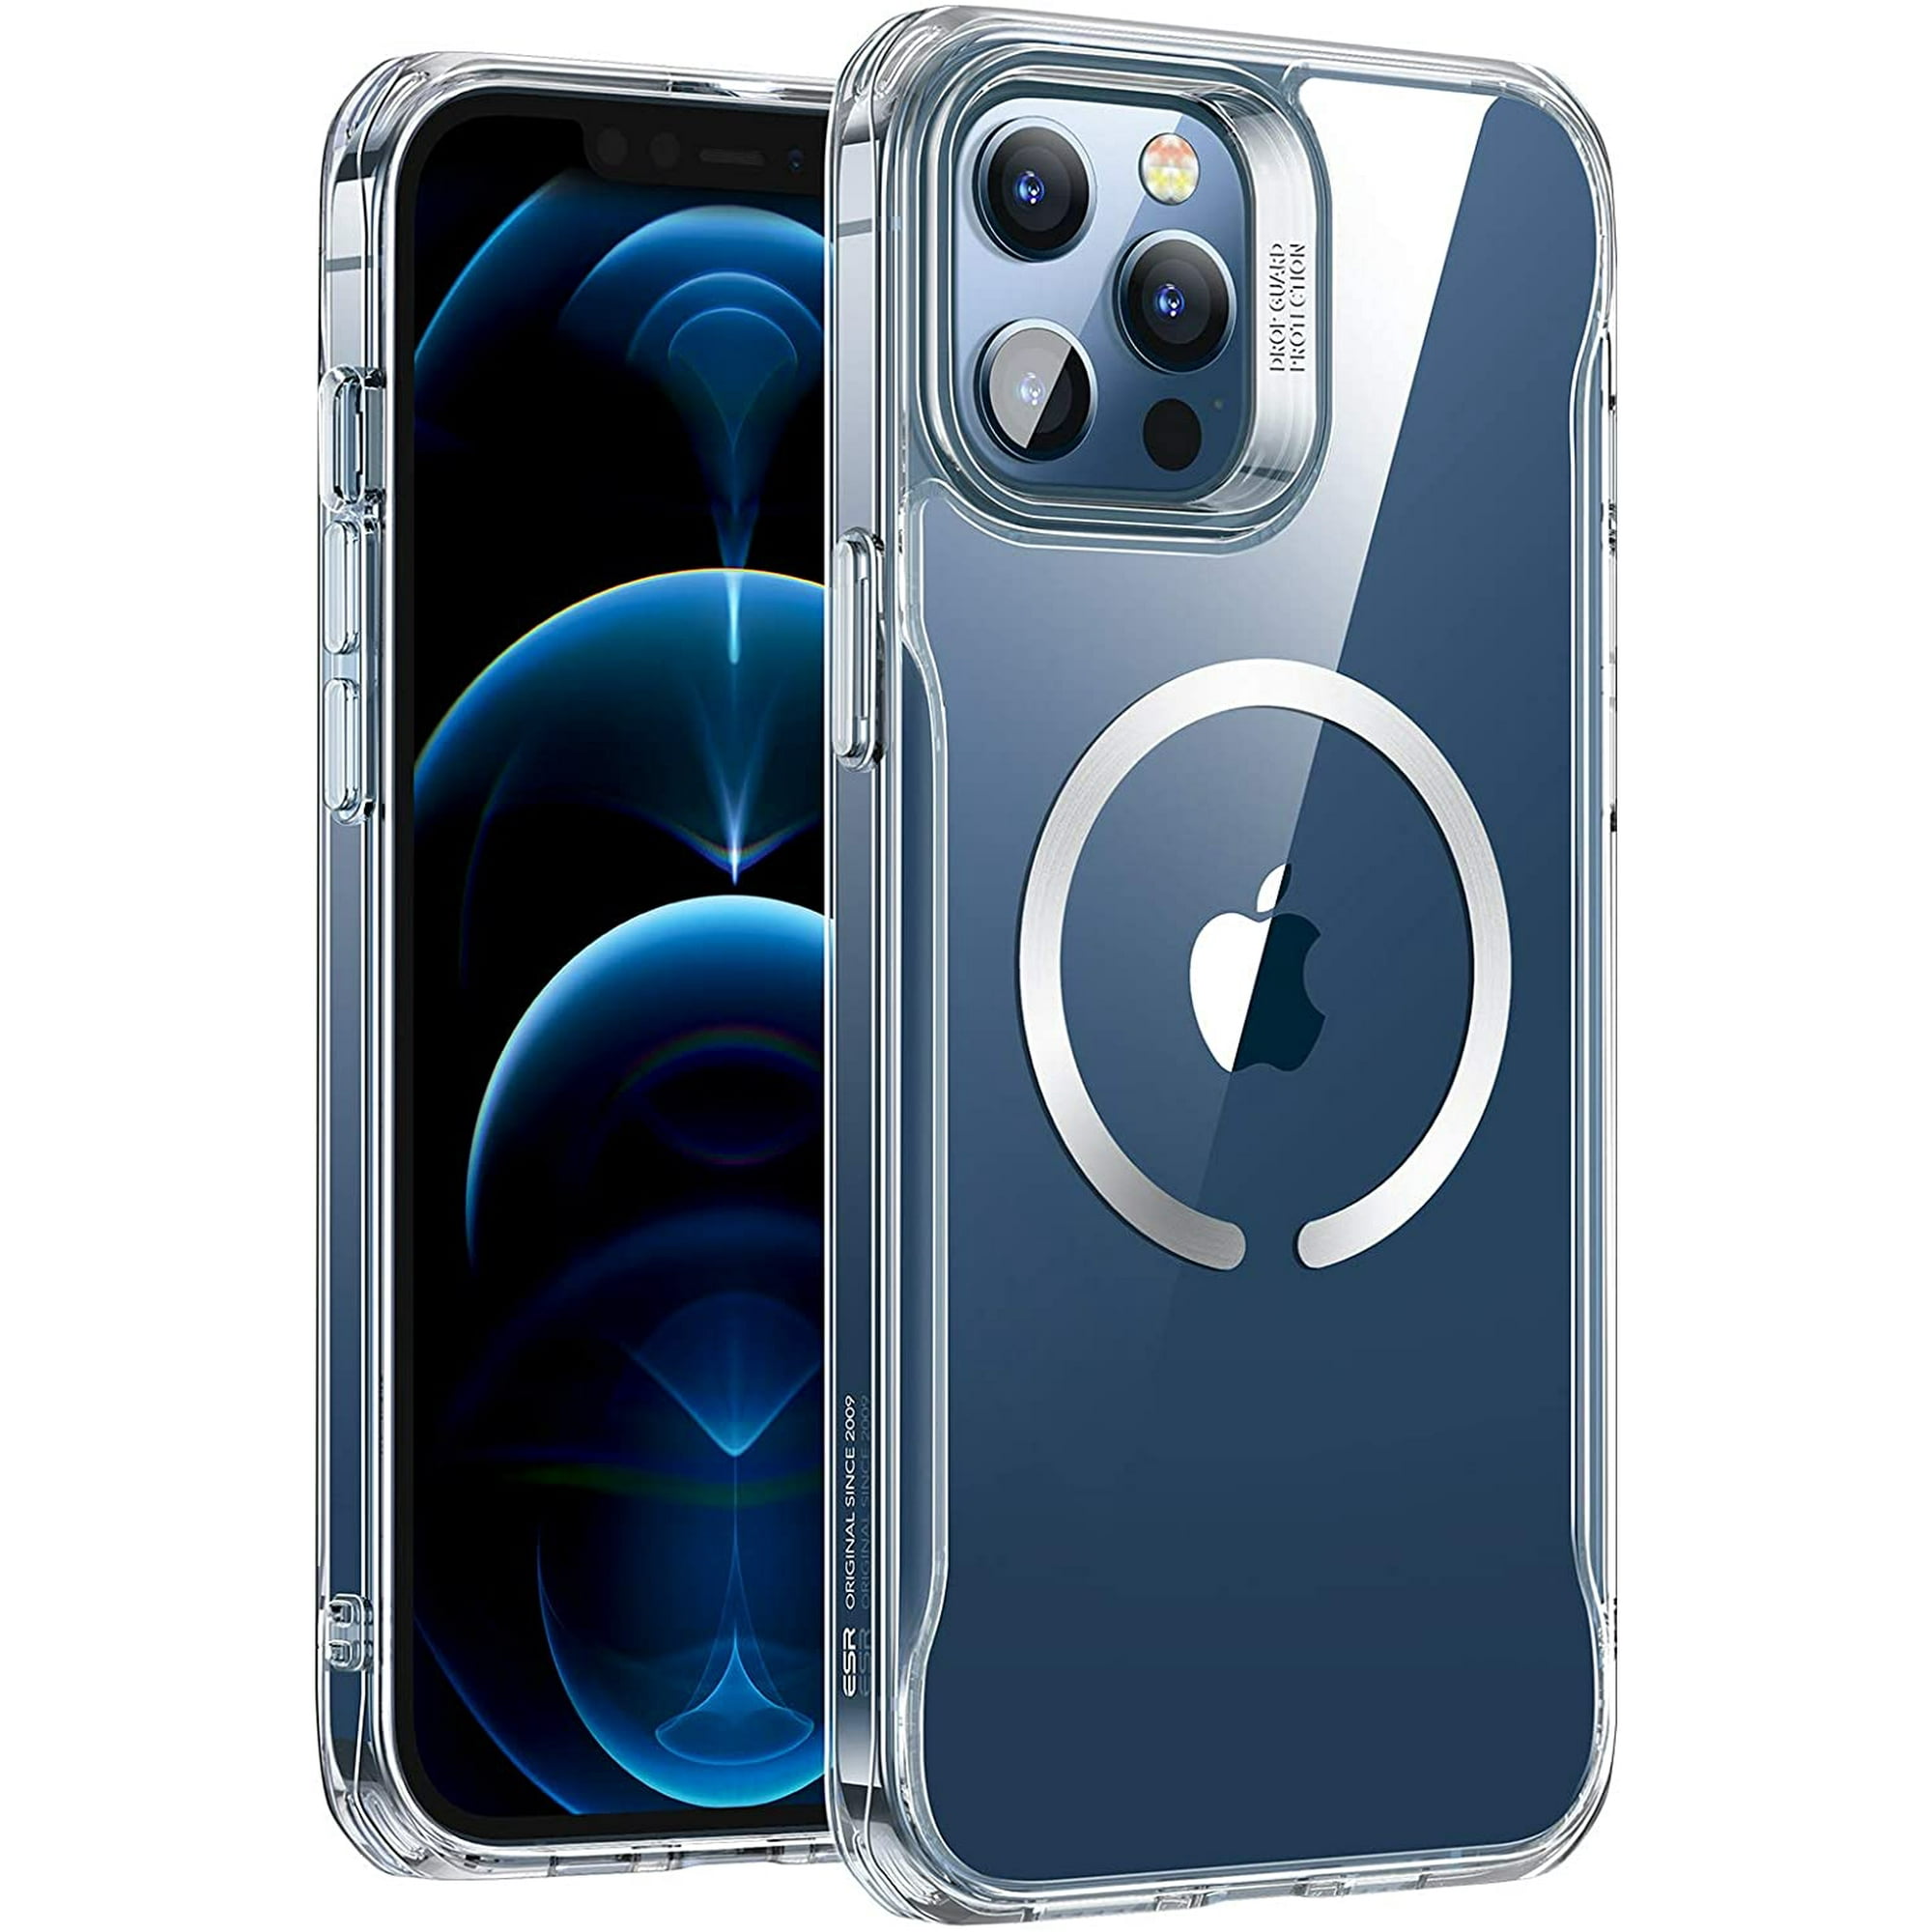 ESR Sidekick Hybrid Case Compatible with iPhone 12 Pro Max (2020